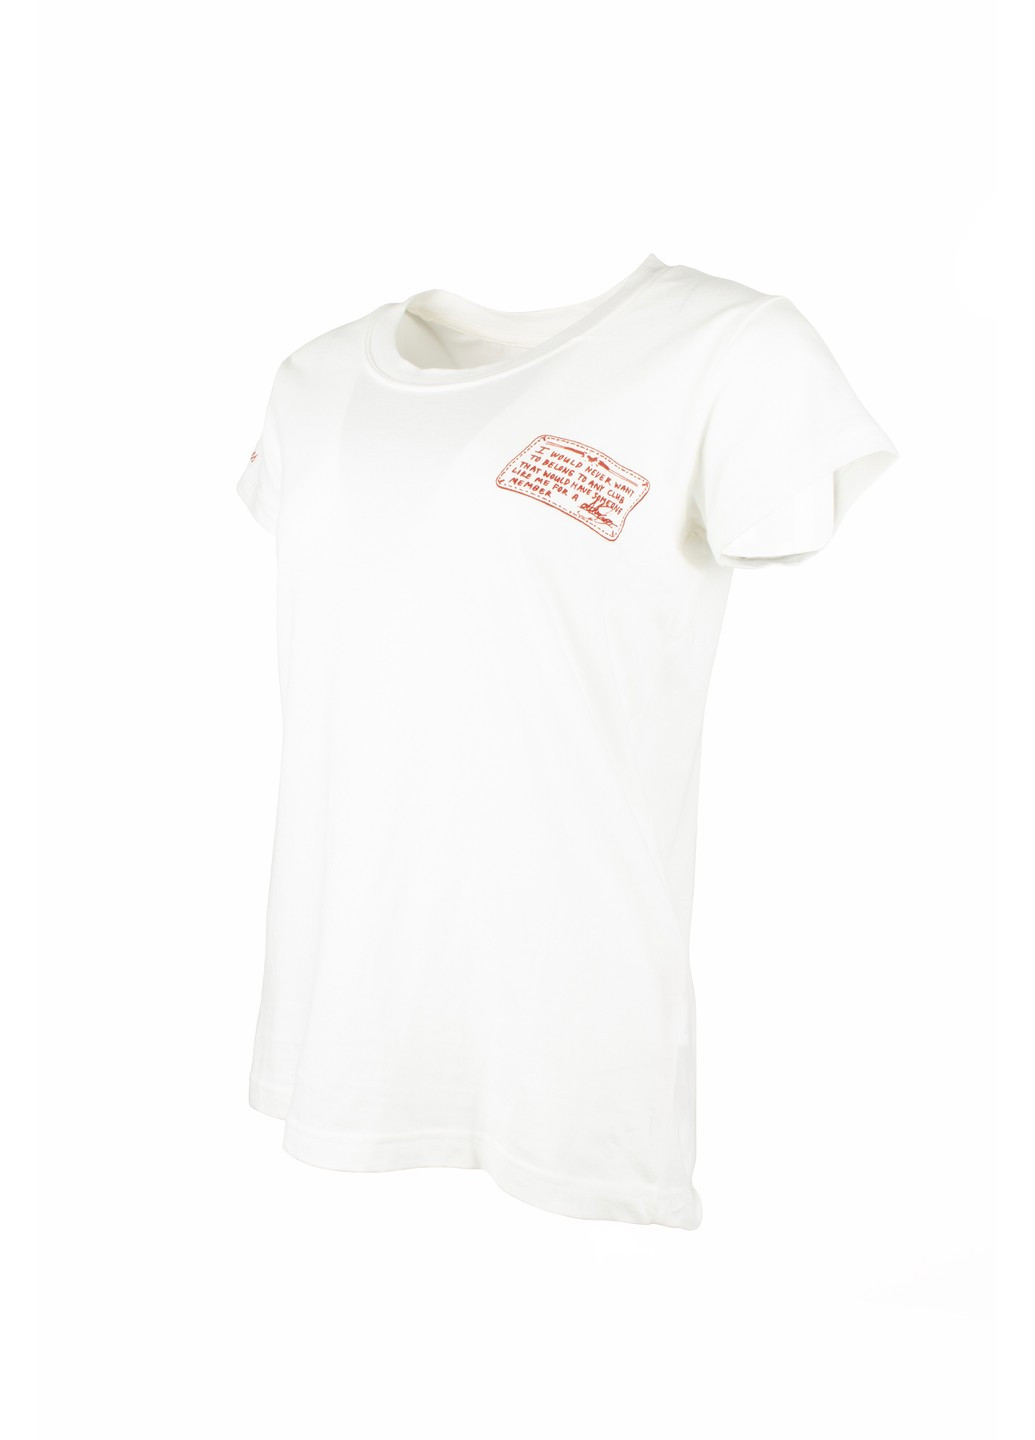 Белая летняя футболка женская horrible белая 011220-002011 Good Genes